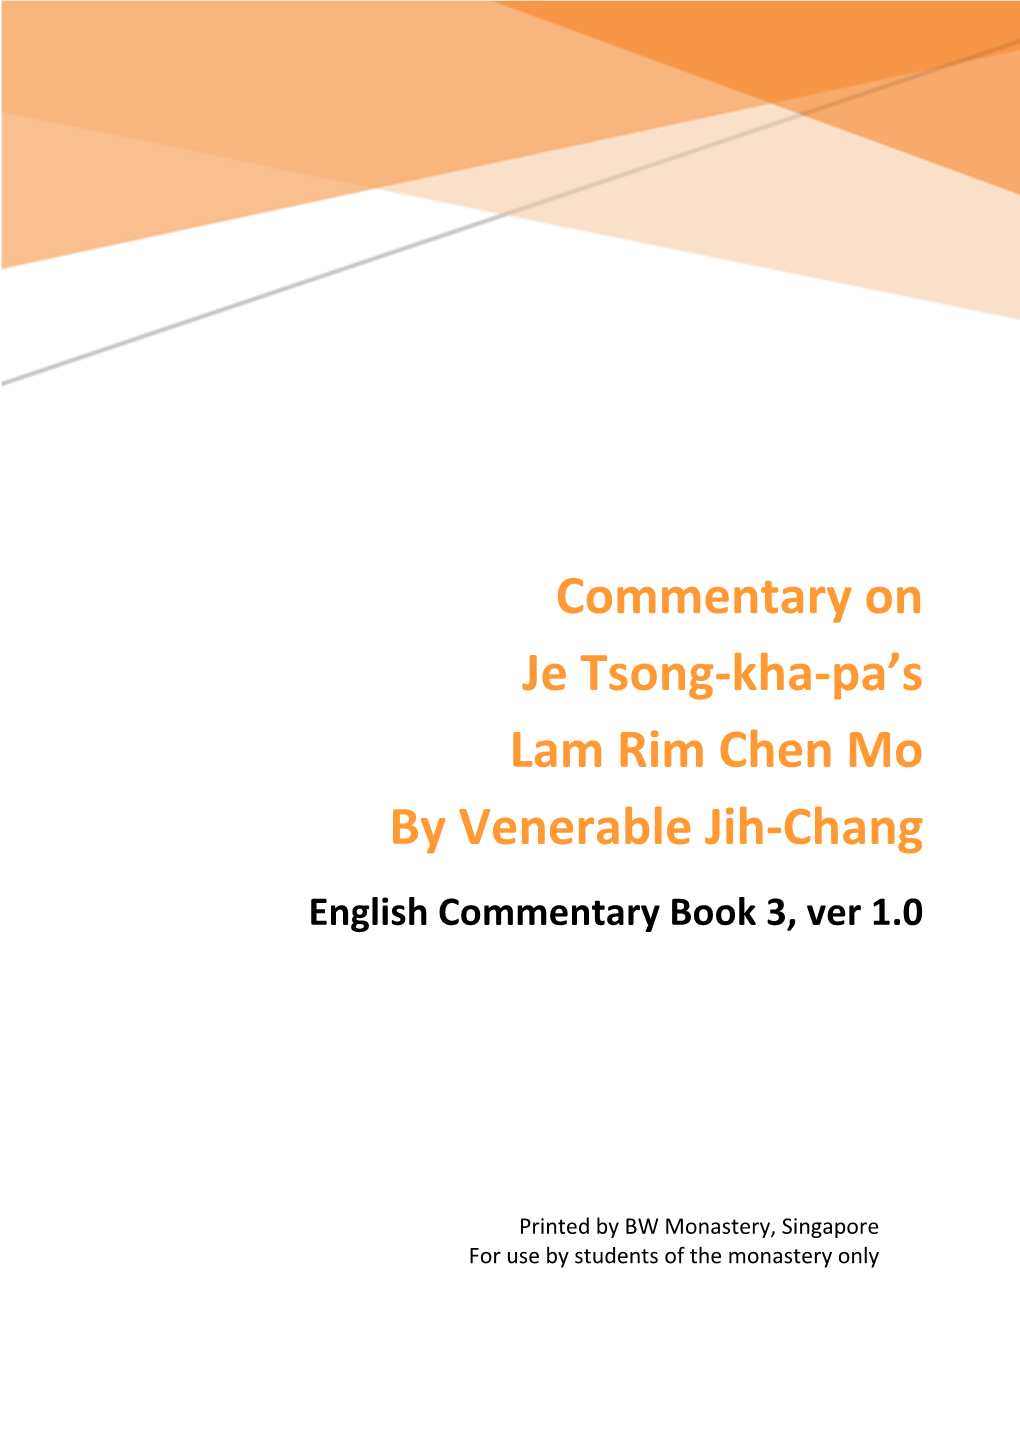 Commentary on Je Tsong-Kha-Pa's Lam Rim Chen Mo by Venerable Jih-Chang